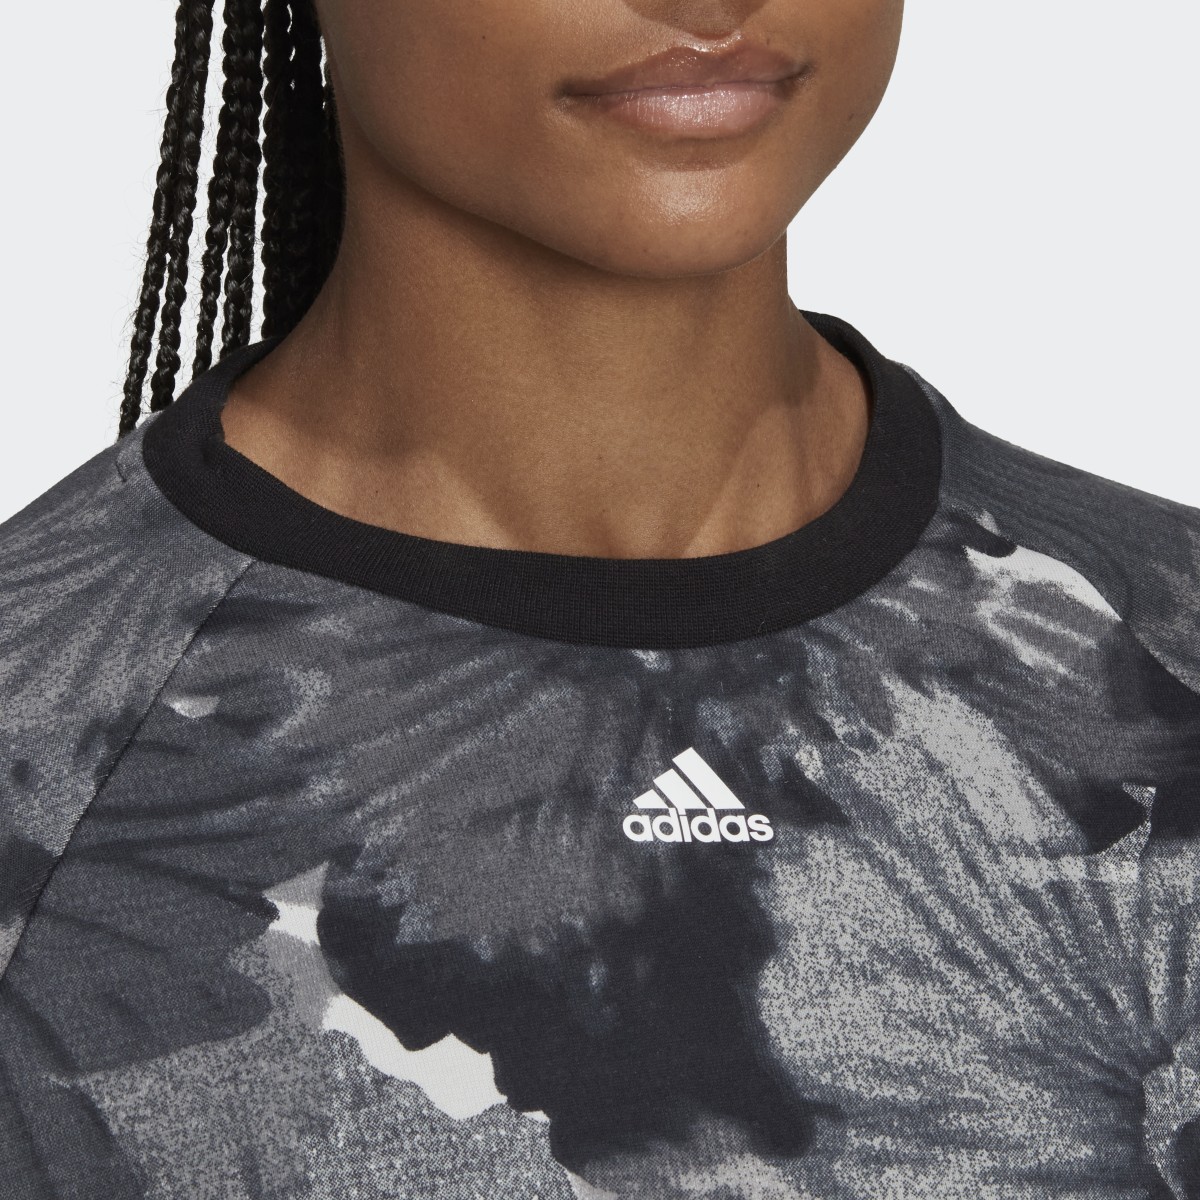 Adidas Allover Print Sweatshirt. 6